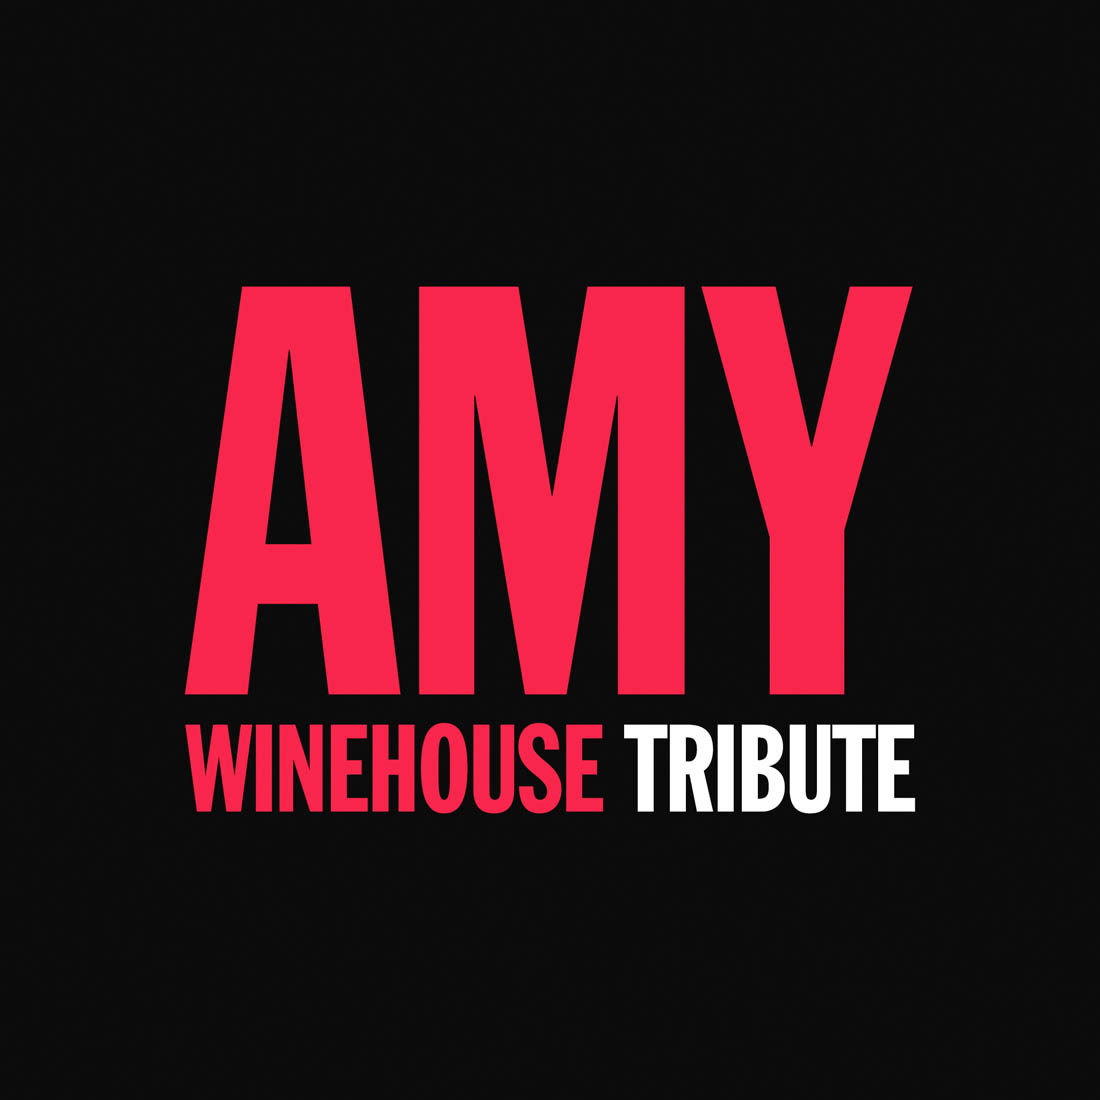 Amy Winehouse Tribute (DK) - Photo: VinDanmark